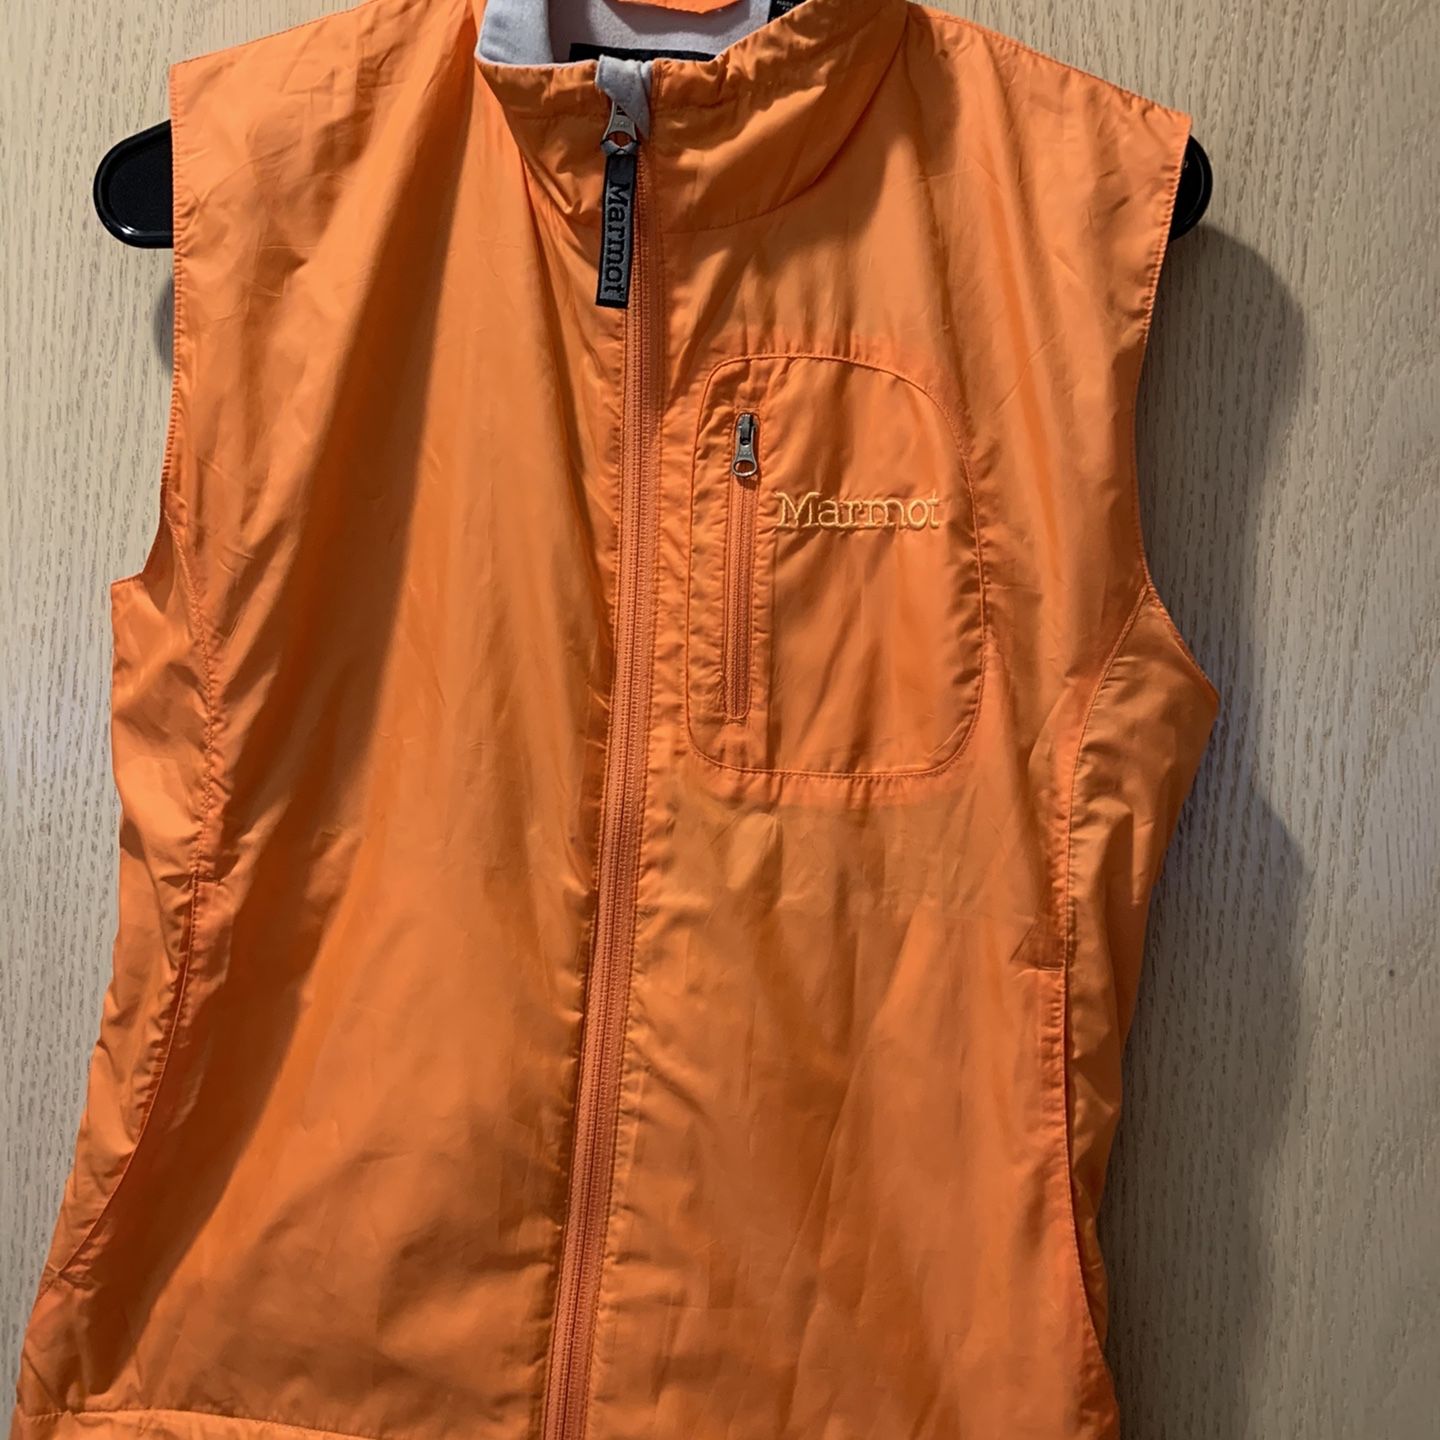 Women’s S Marmot Orange Running Vest